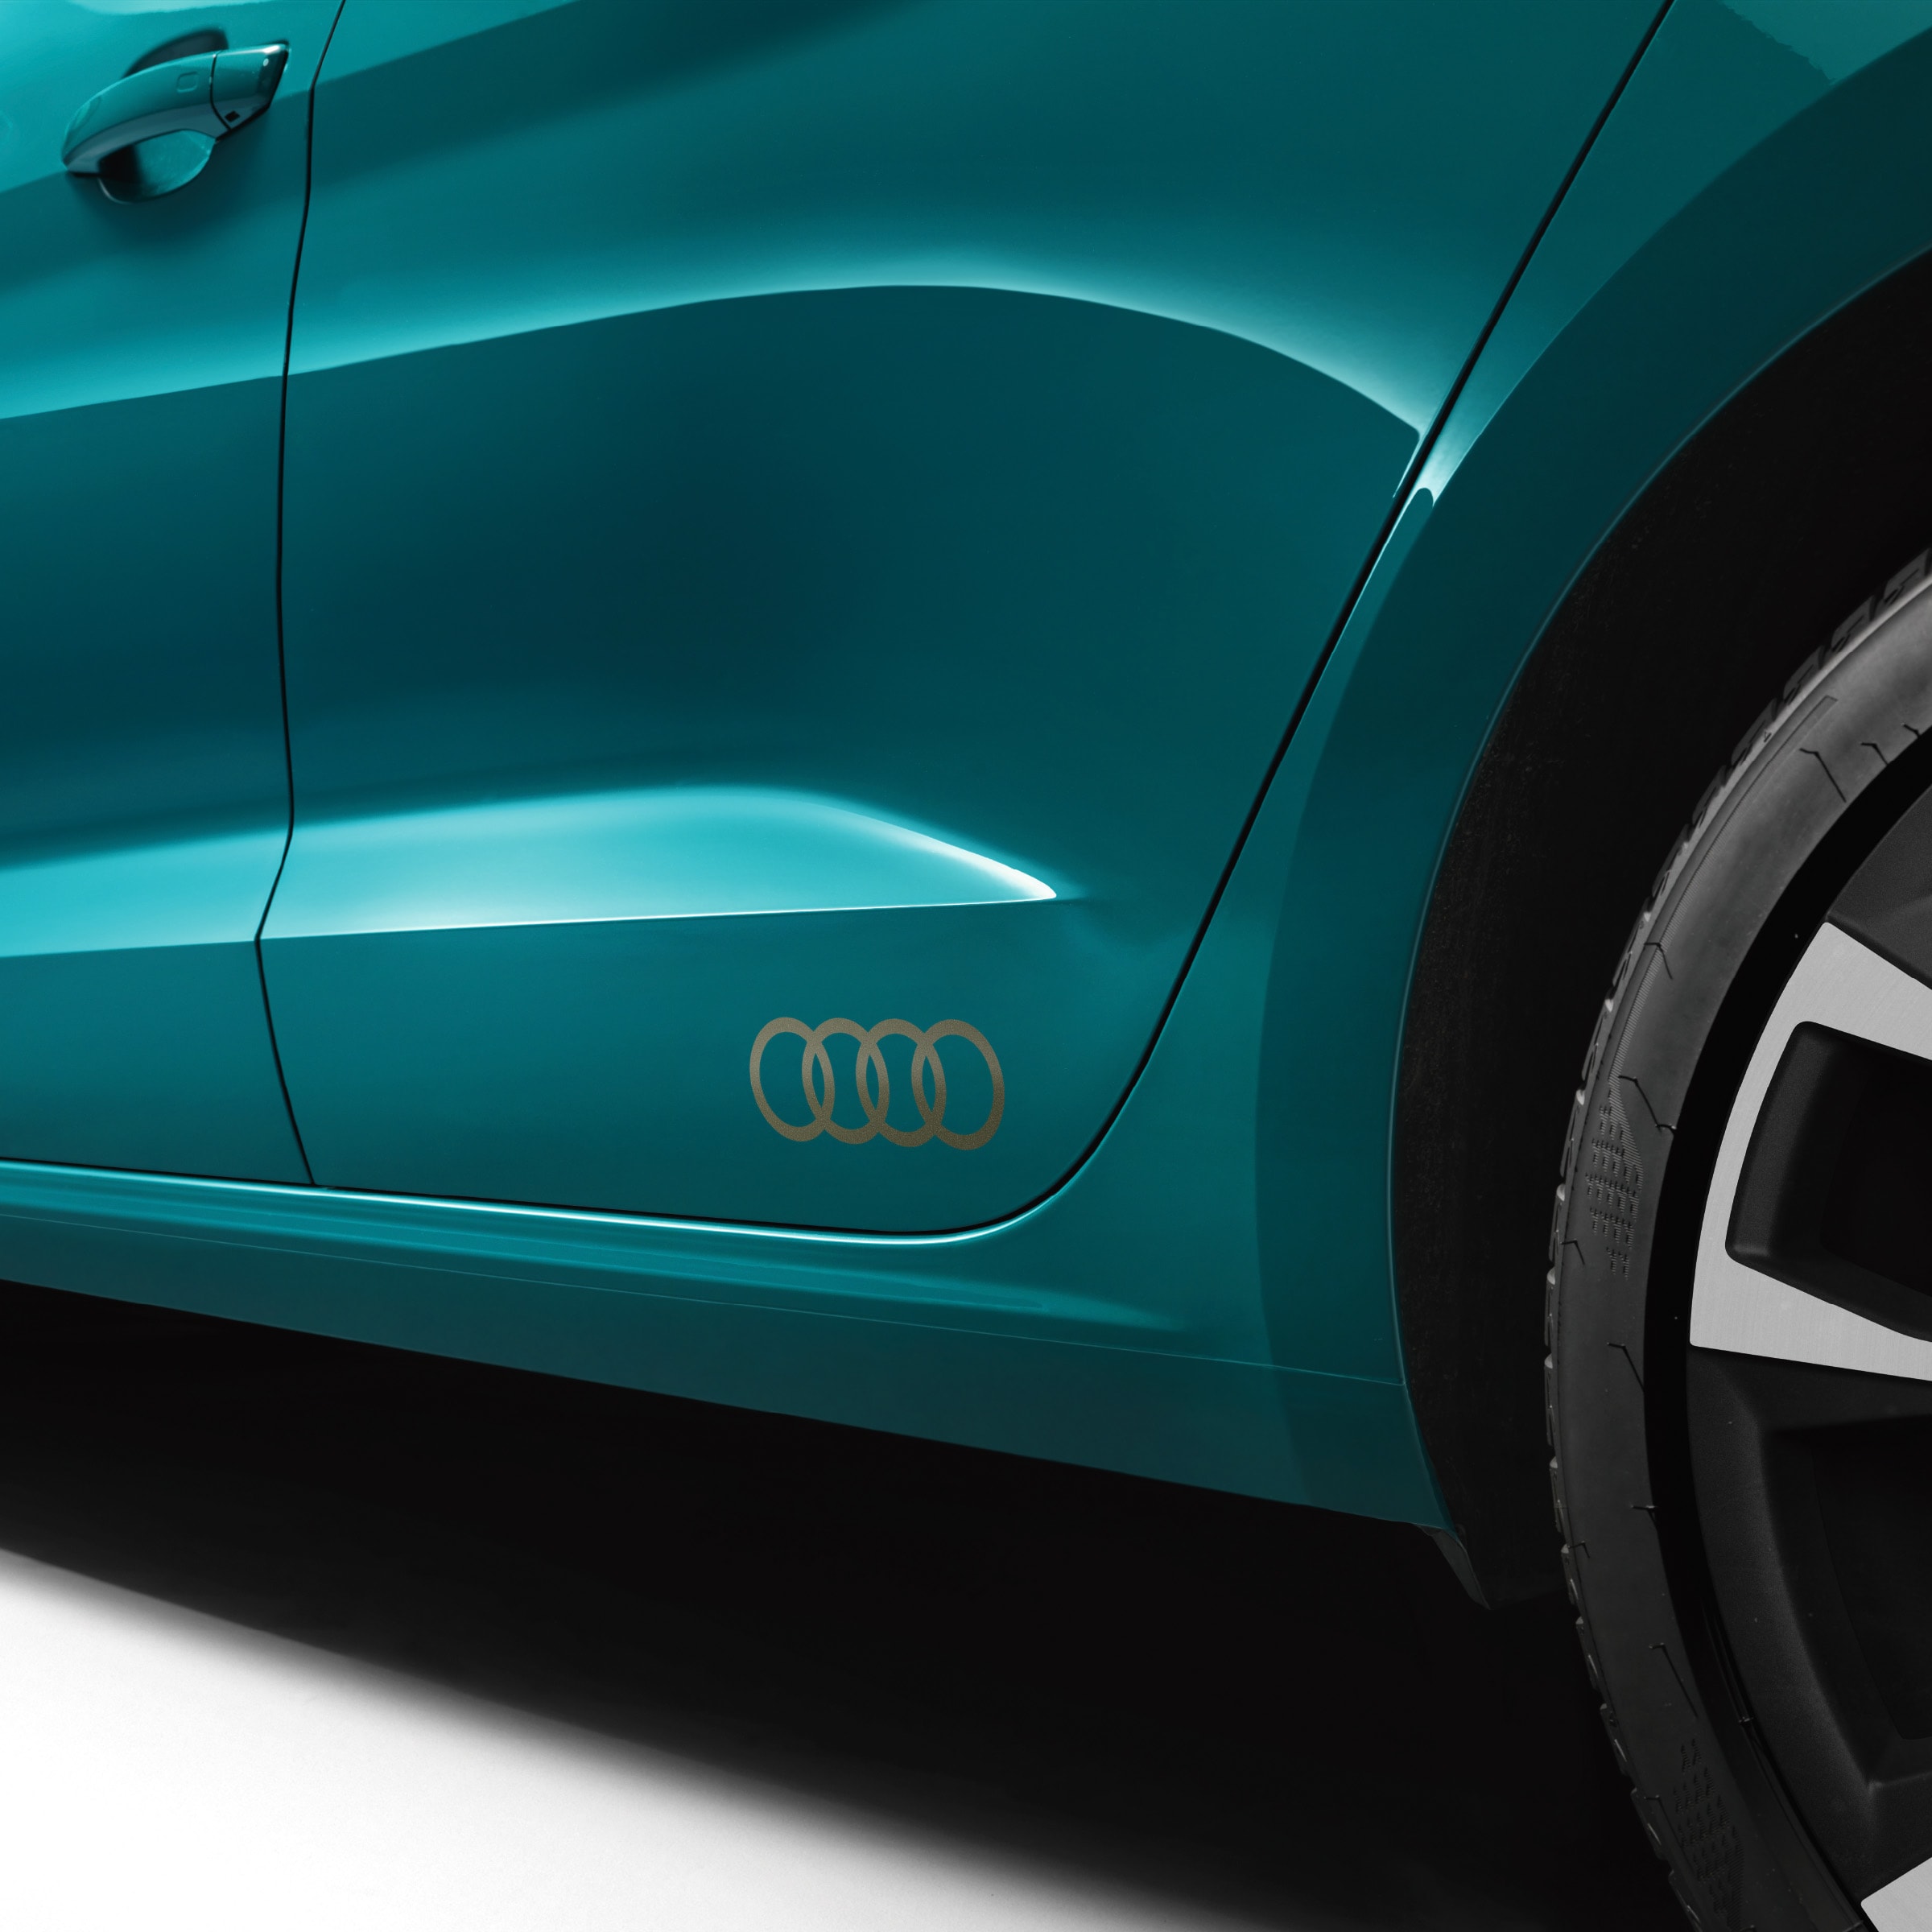 Dekorfolien Audi Ringe